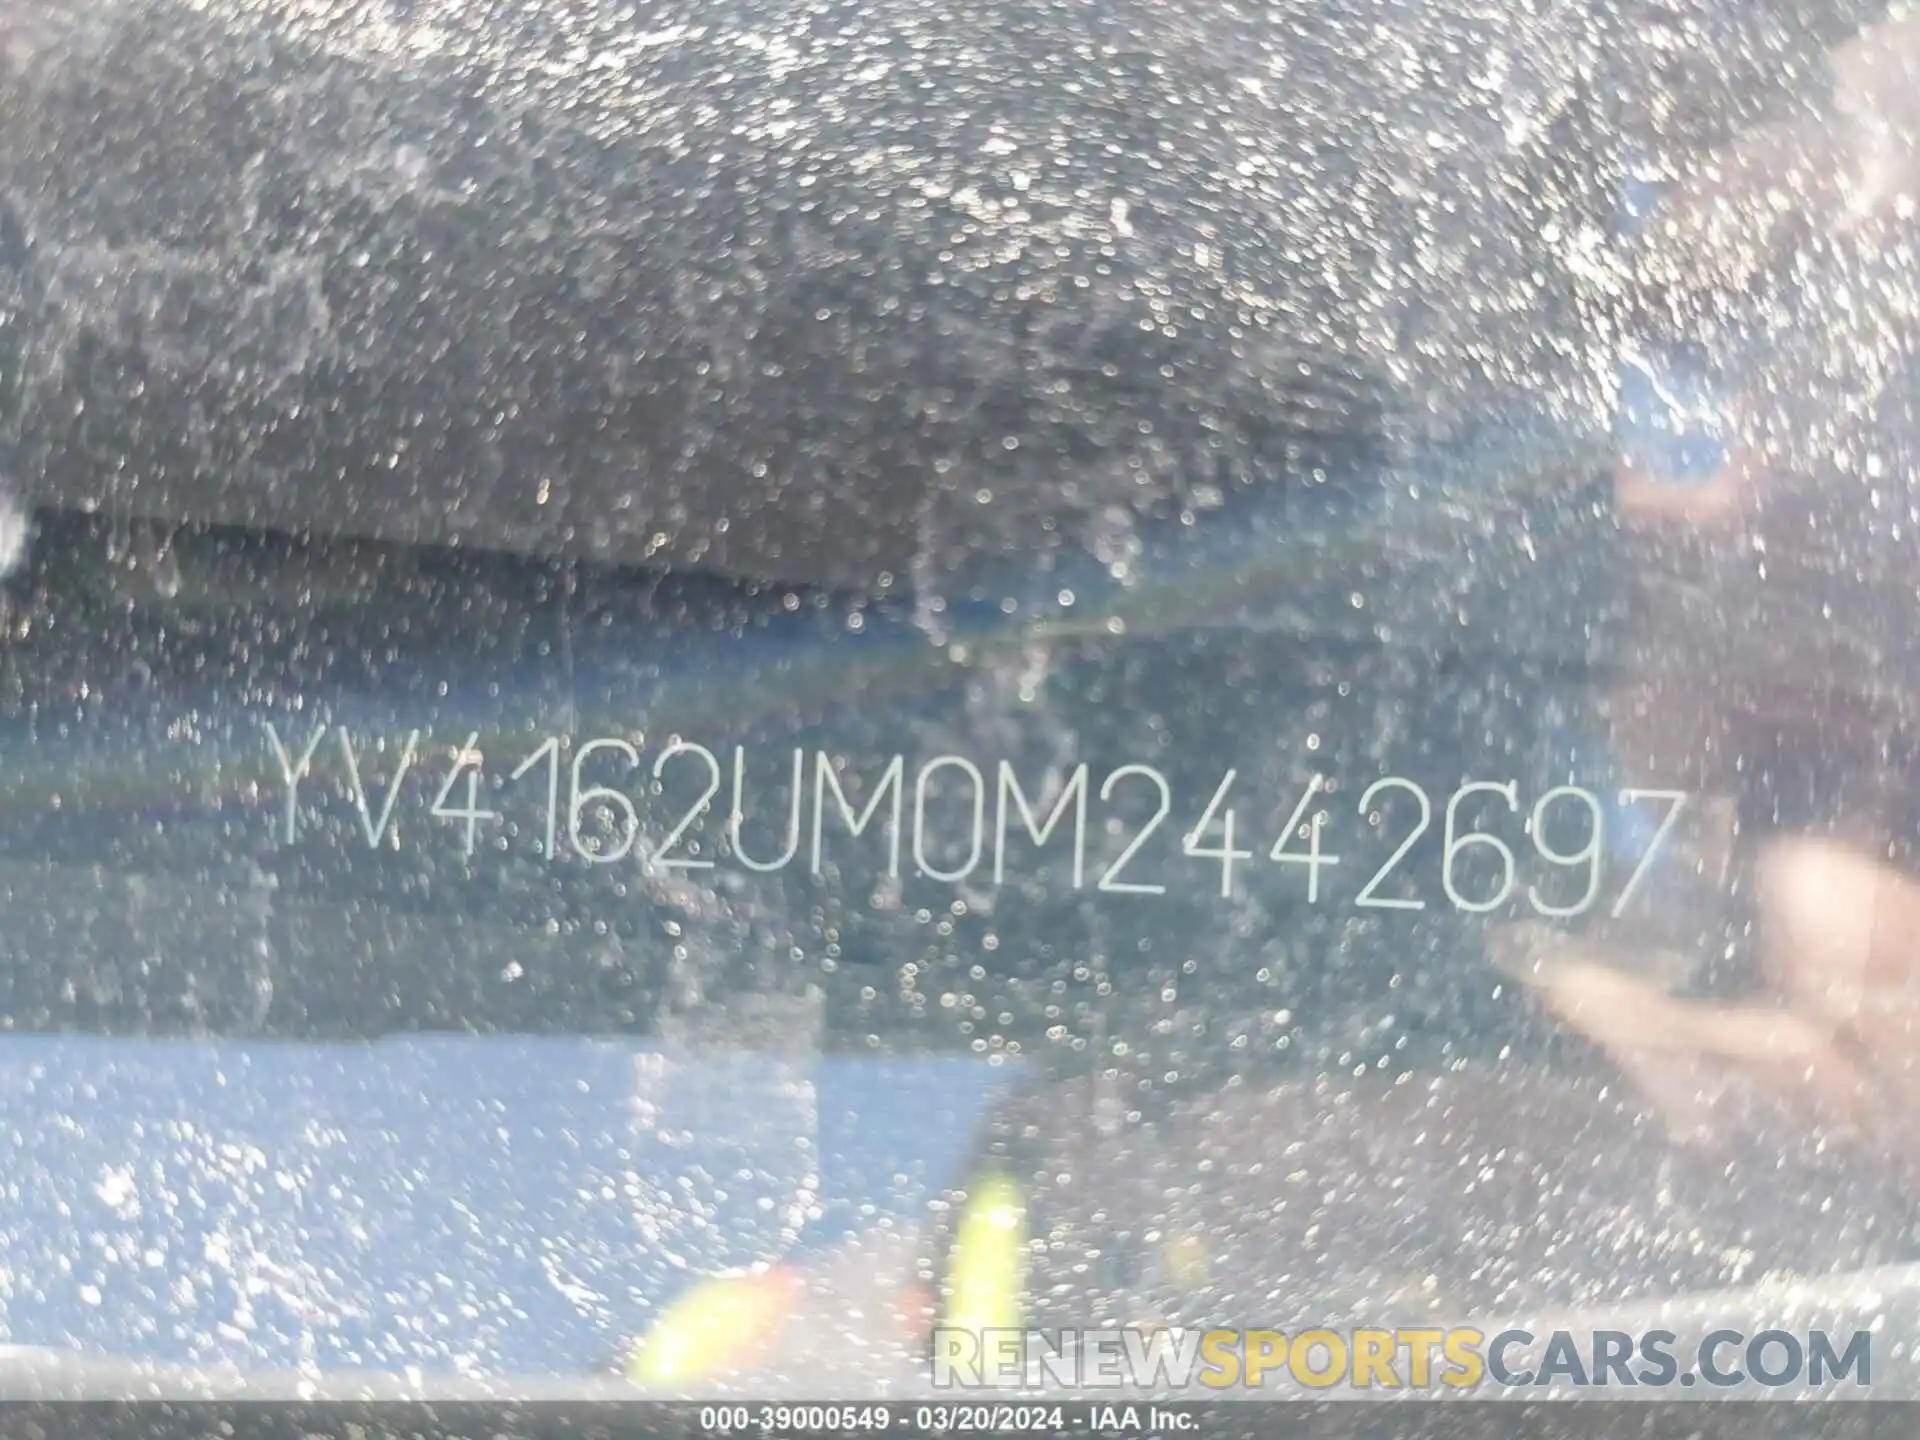 9 Photograph of a damaged car YV4162UM0M2442697 VOLVO XC40 2021